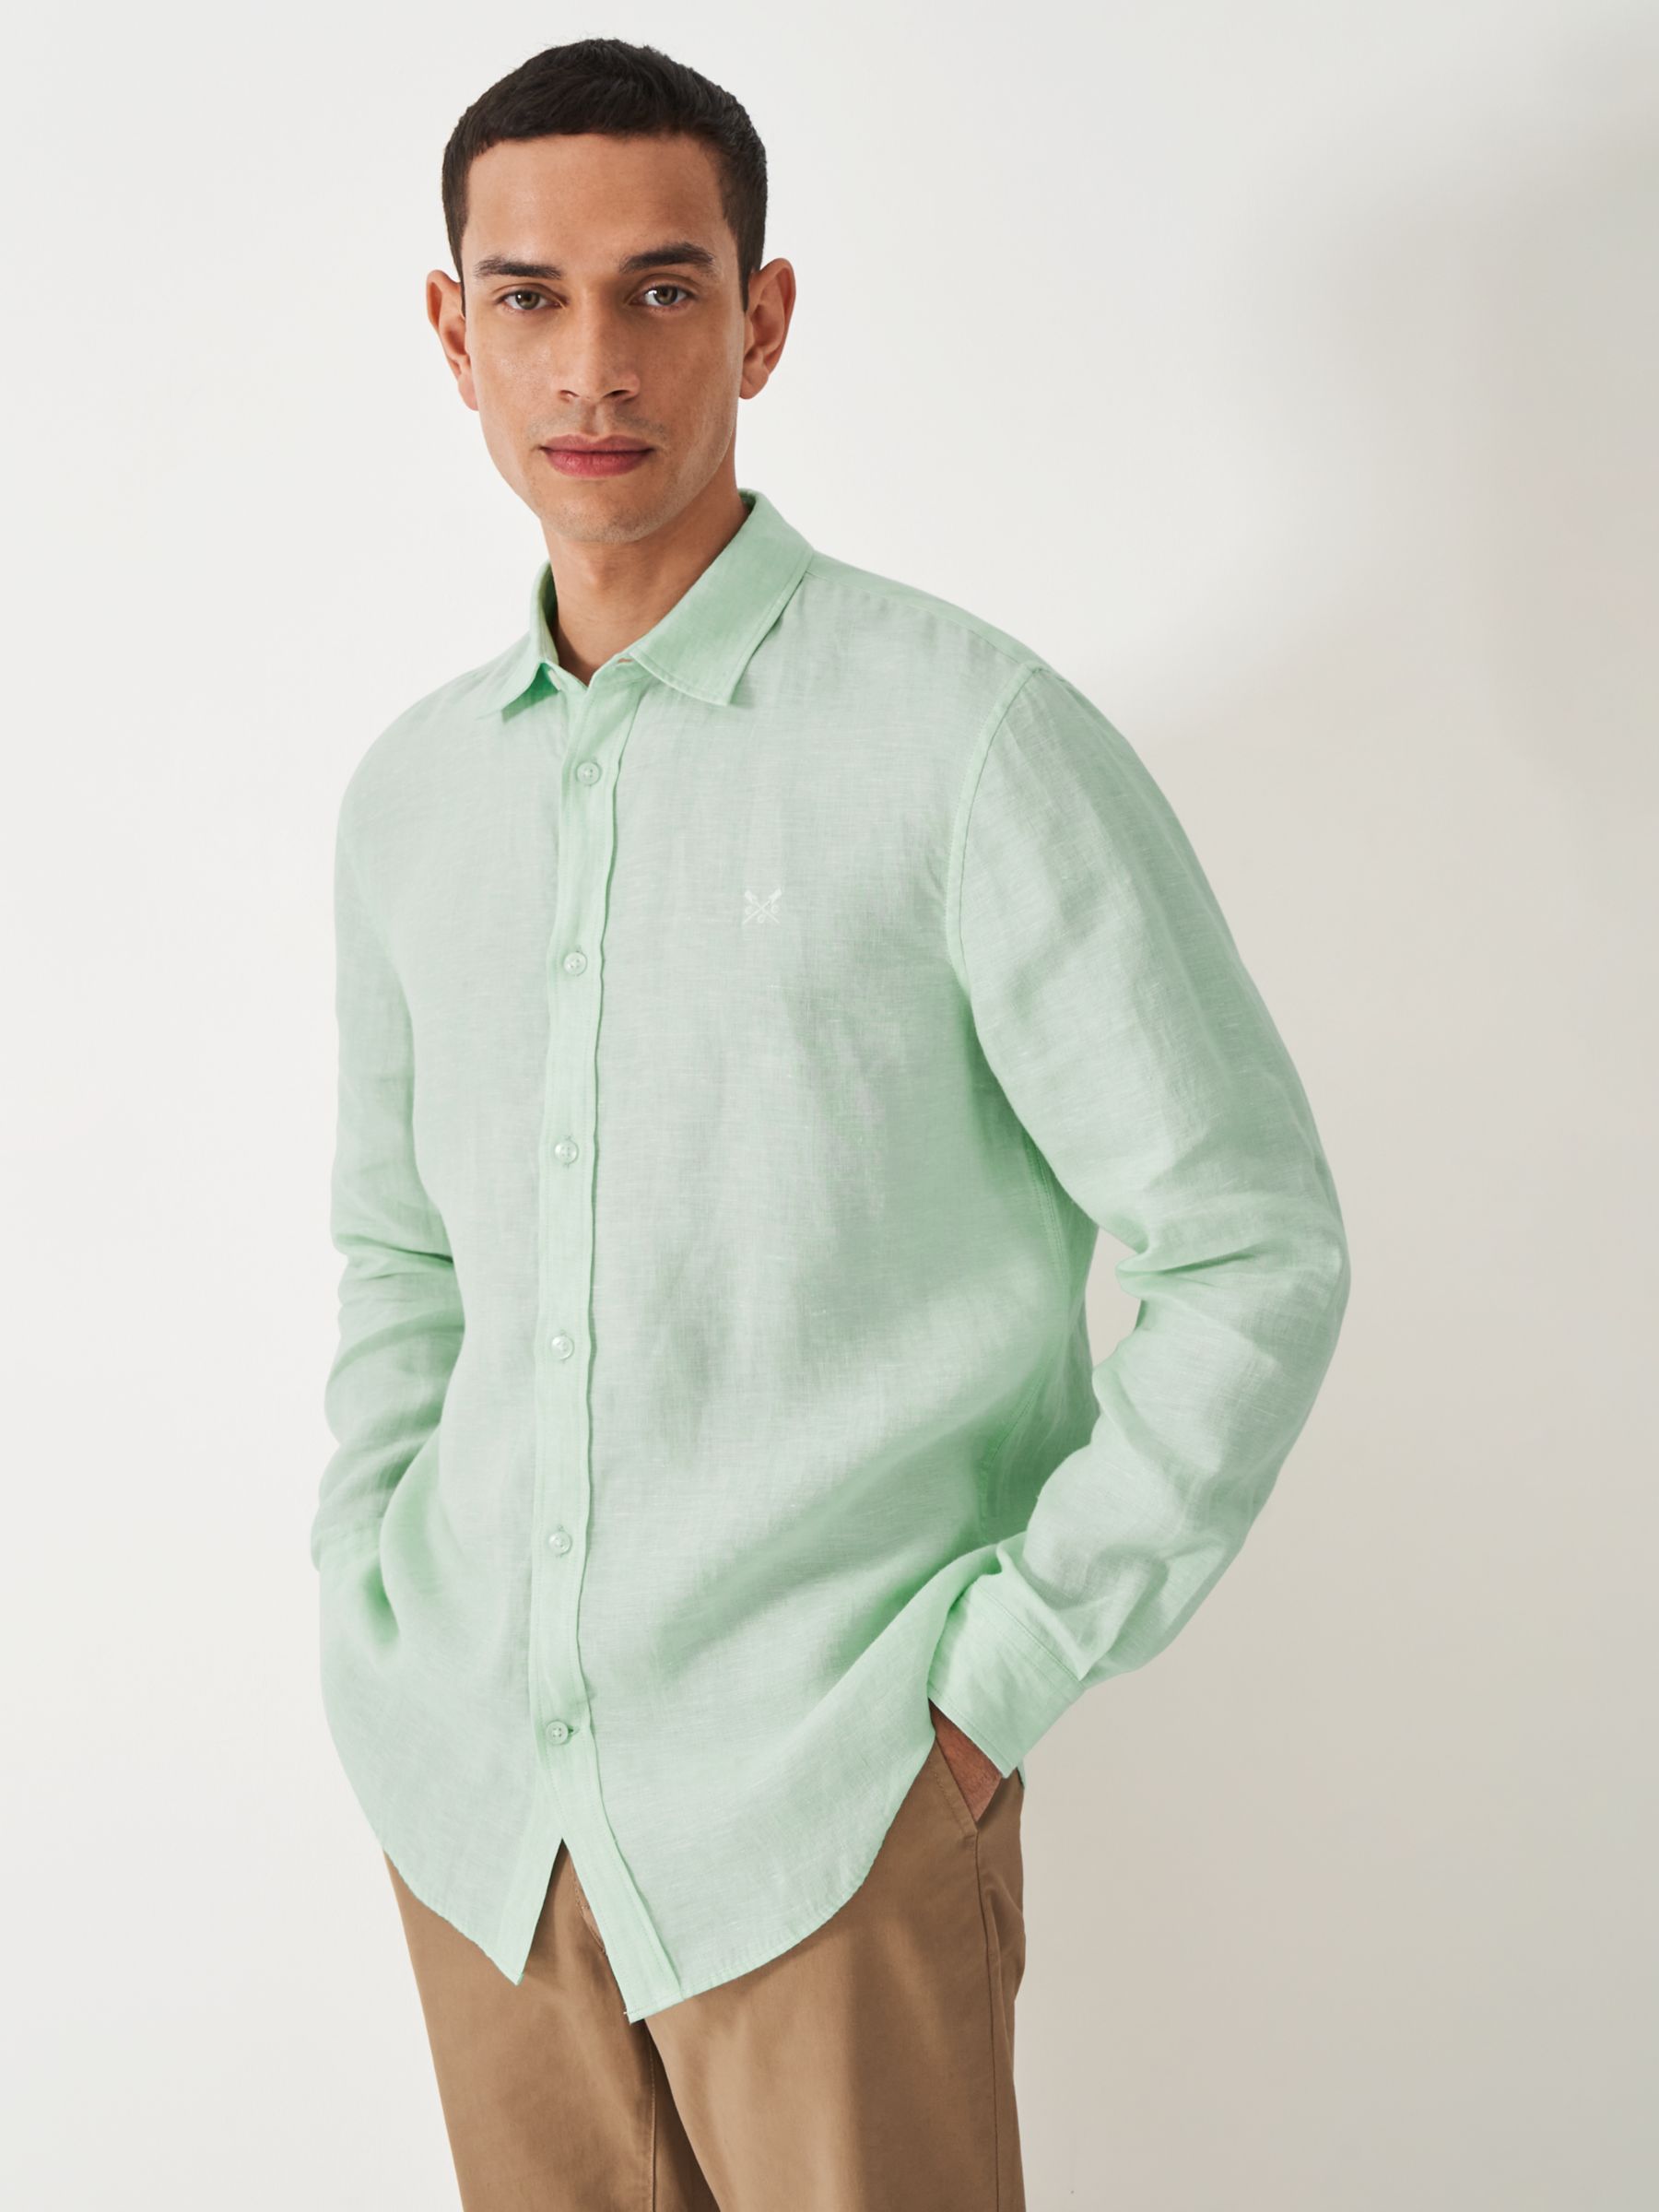 Crew Clothing Long Sleeve Linen Classic Shirt, Mint Green, L